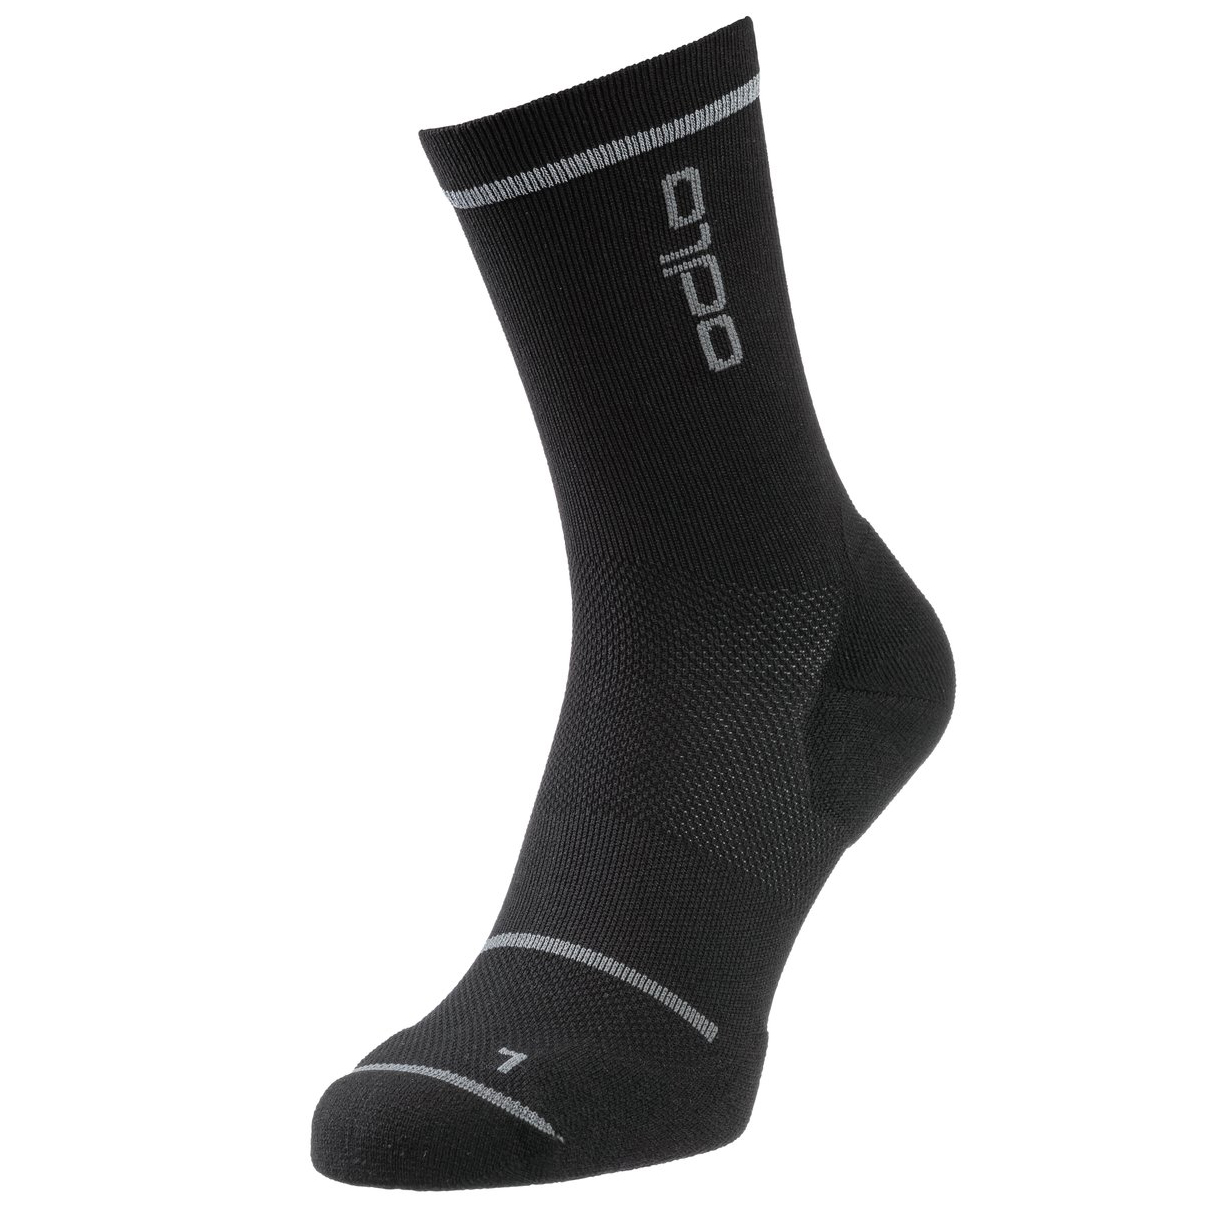 Odlo Ceramicool Reflective Micro Crew Cycling Socks - black